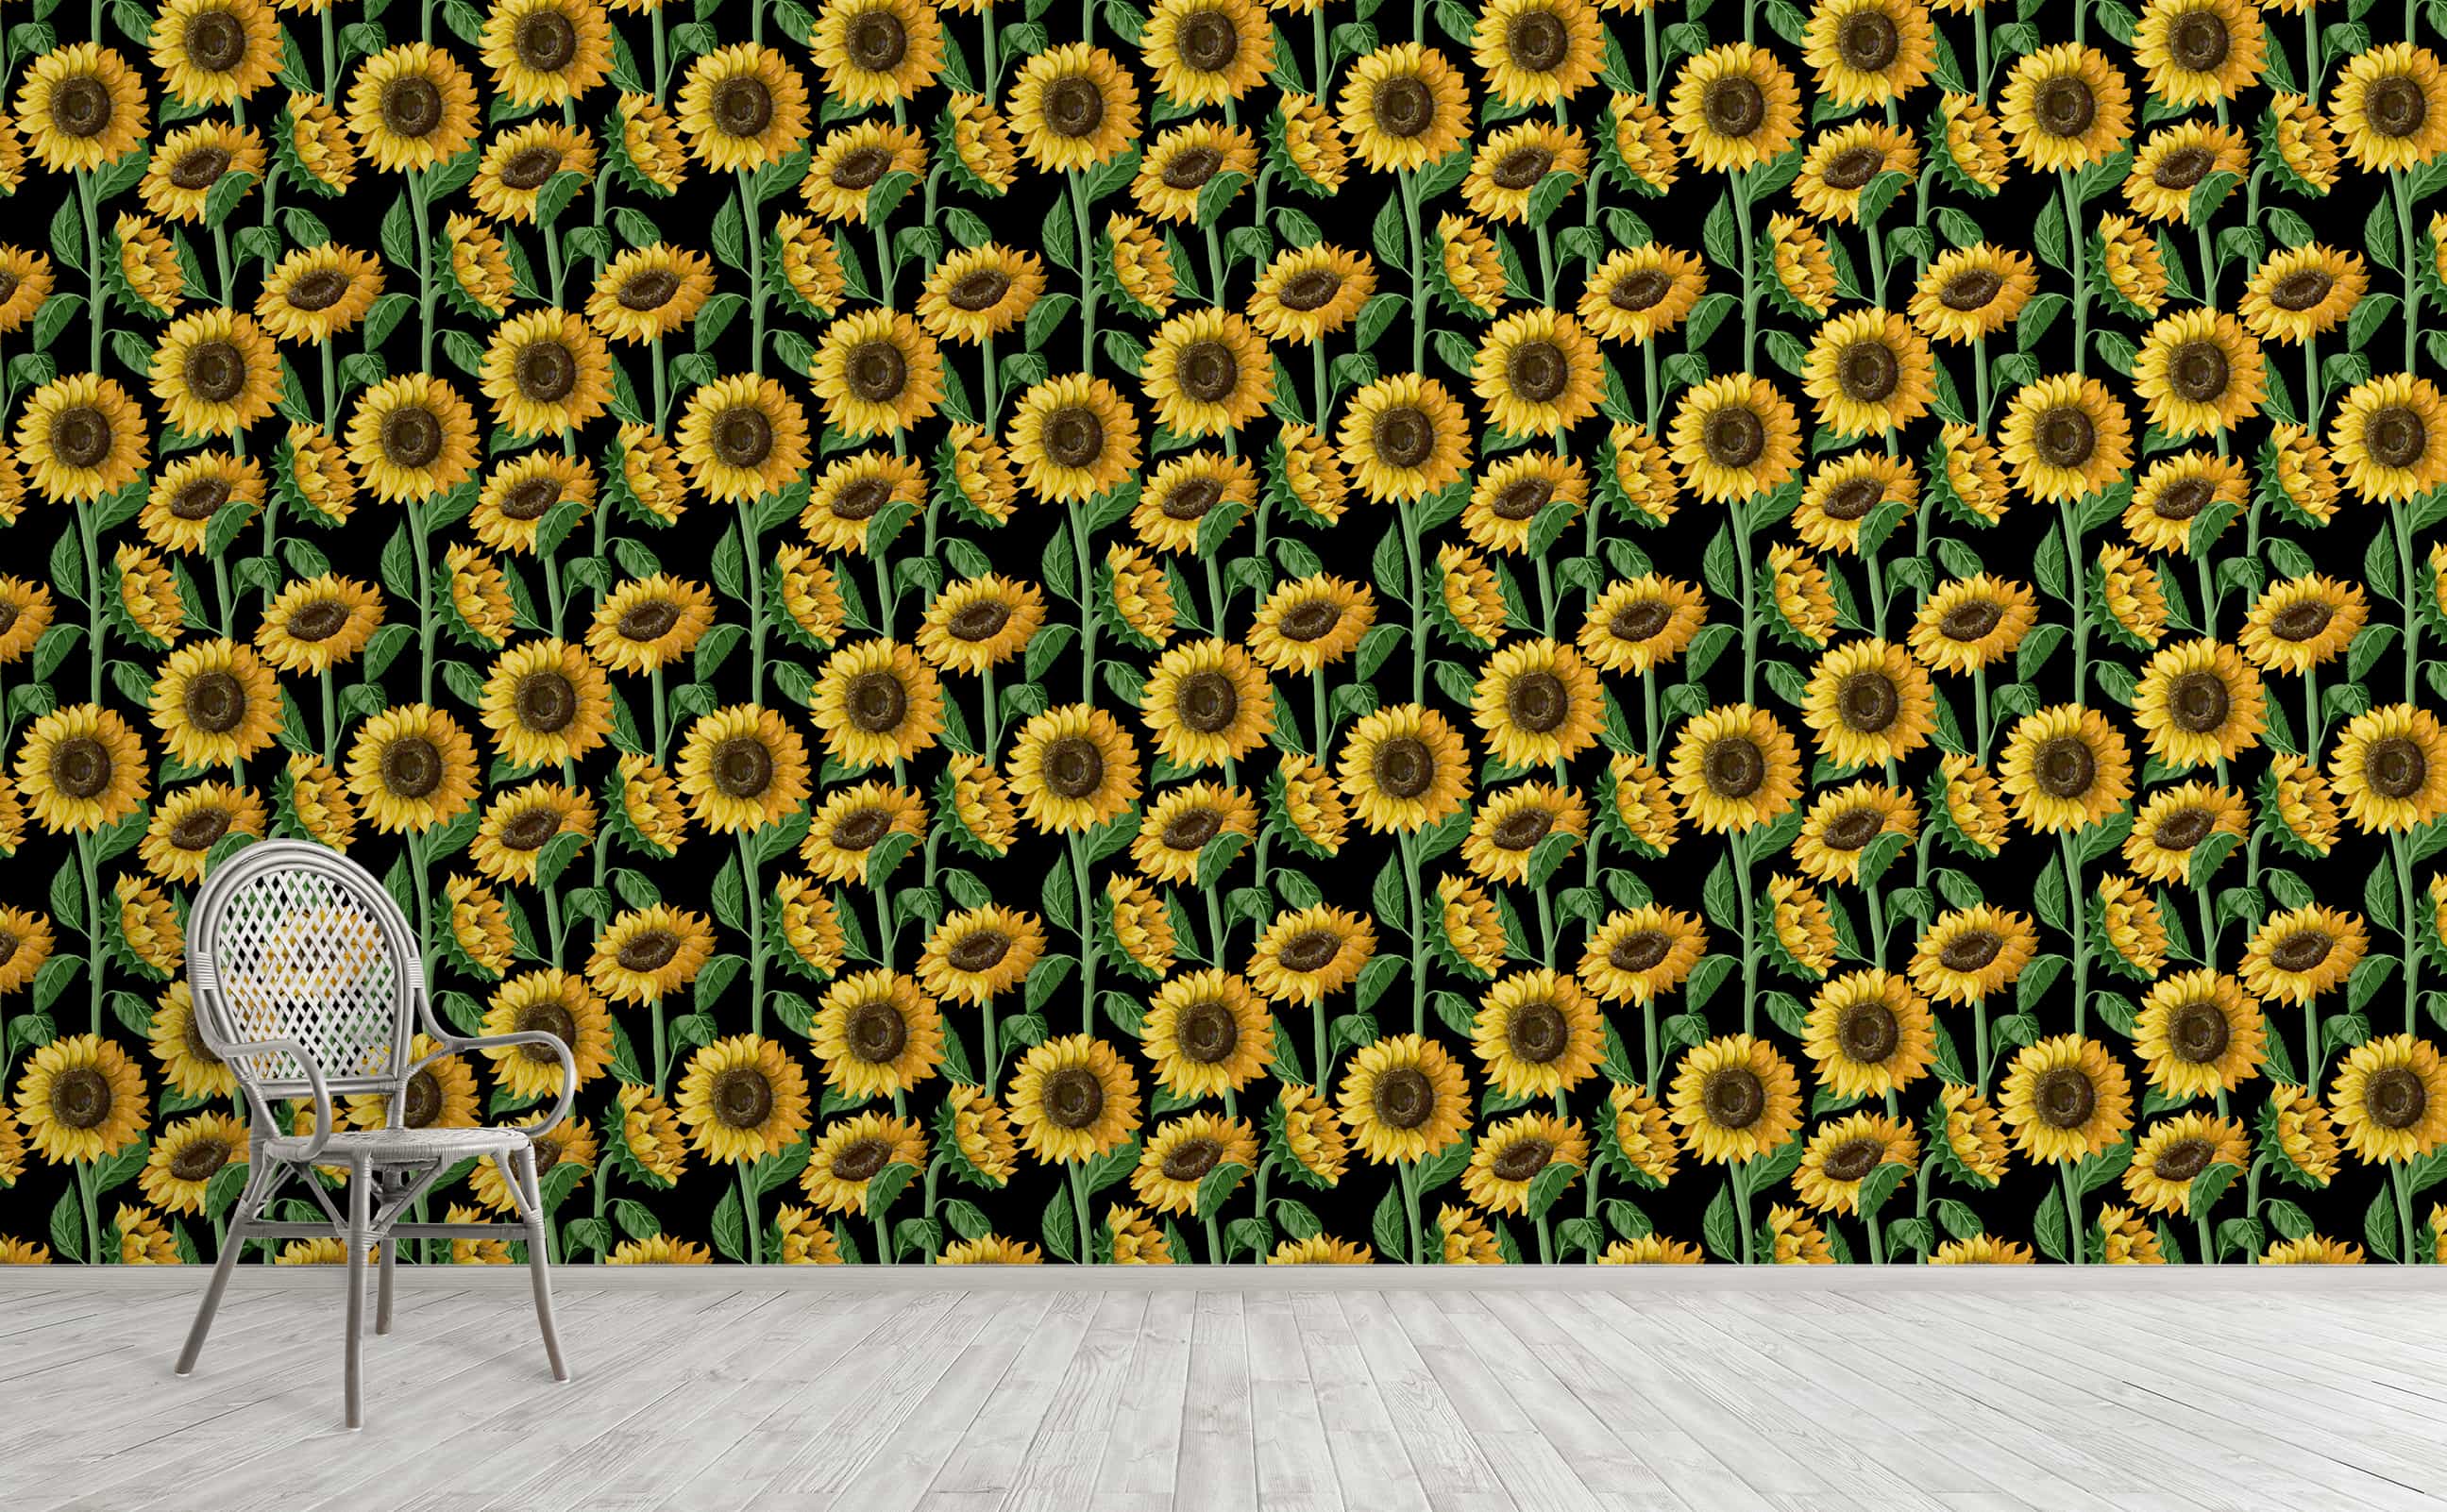 Full Color Sunflower Seamless Black Background Wallpaper For Walls